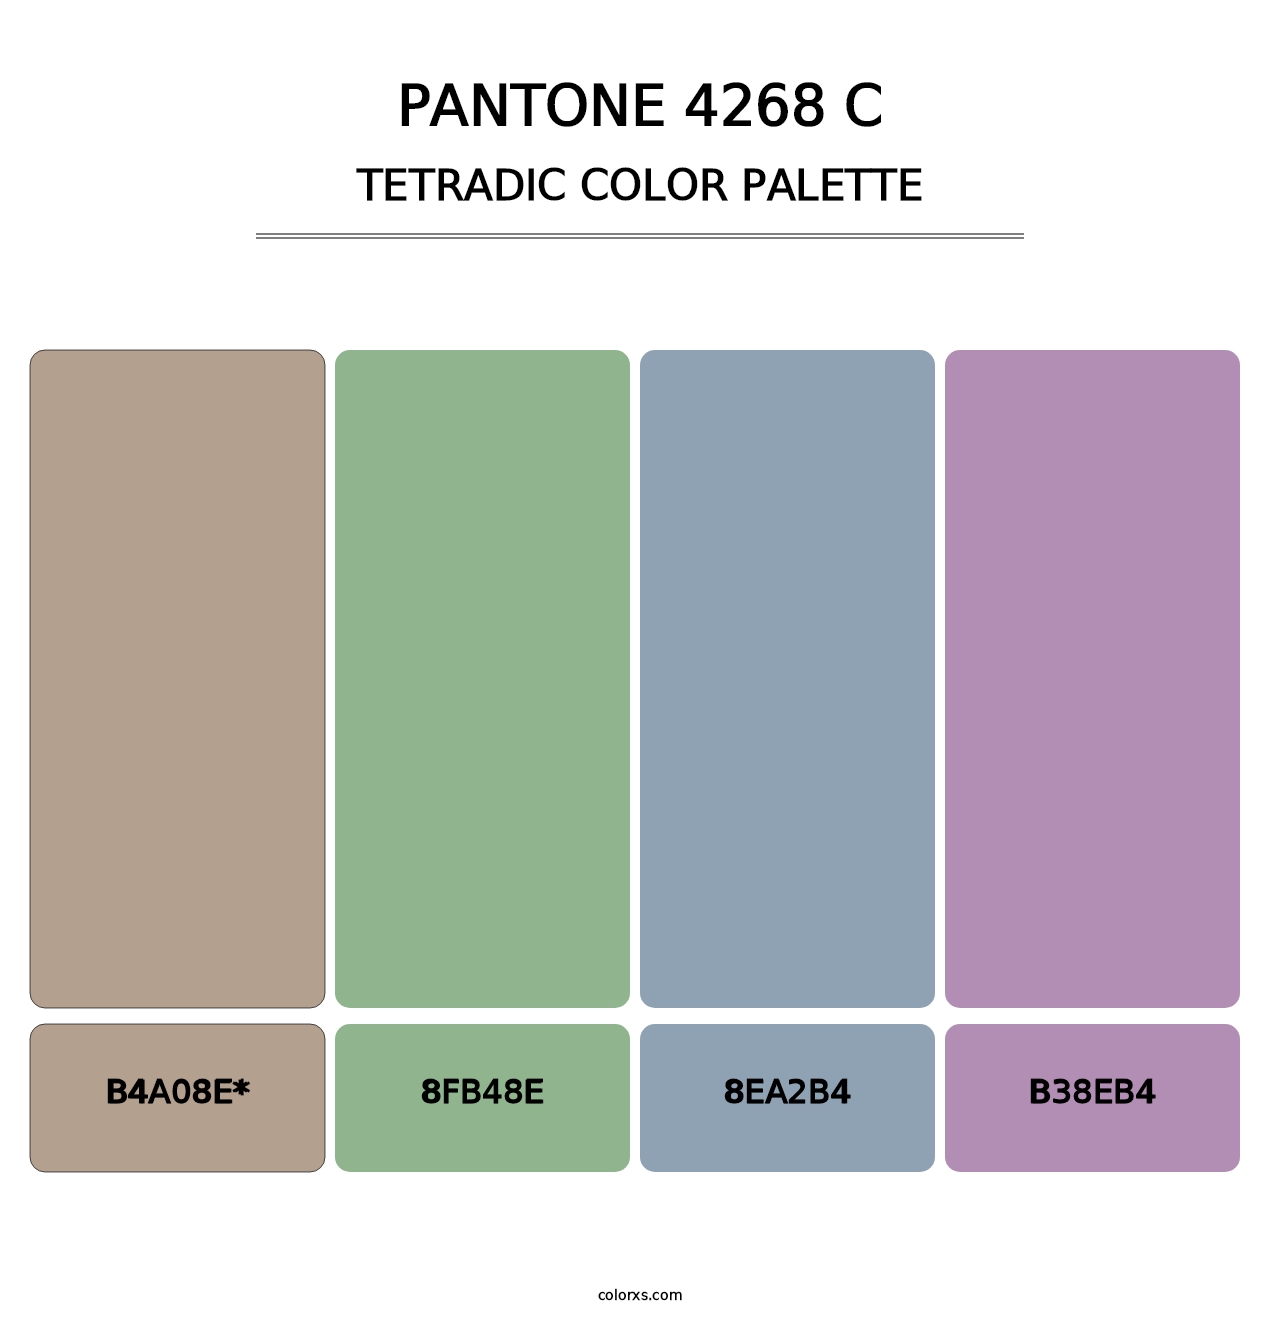 PANTONE 4268 C - Tetradic Color Palette